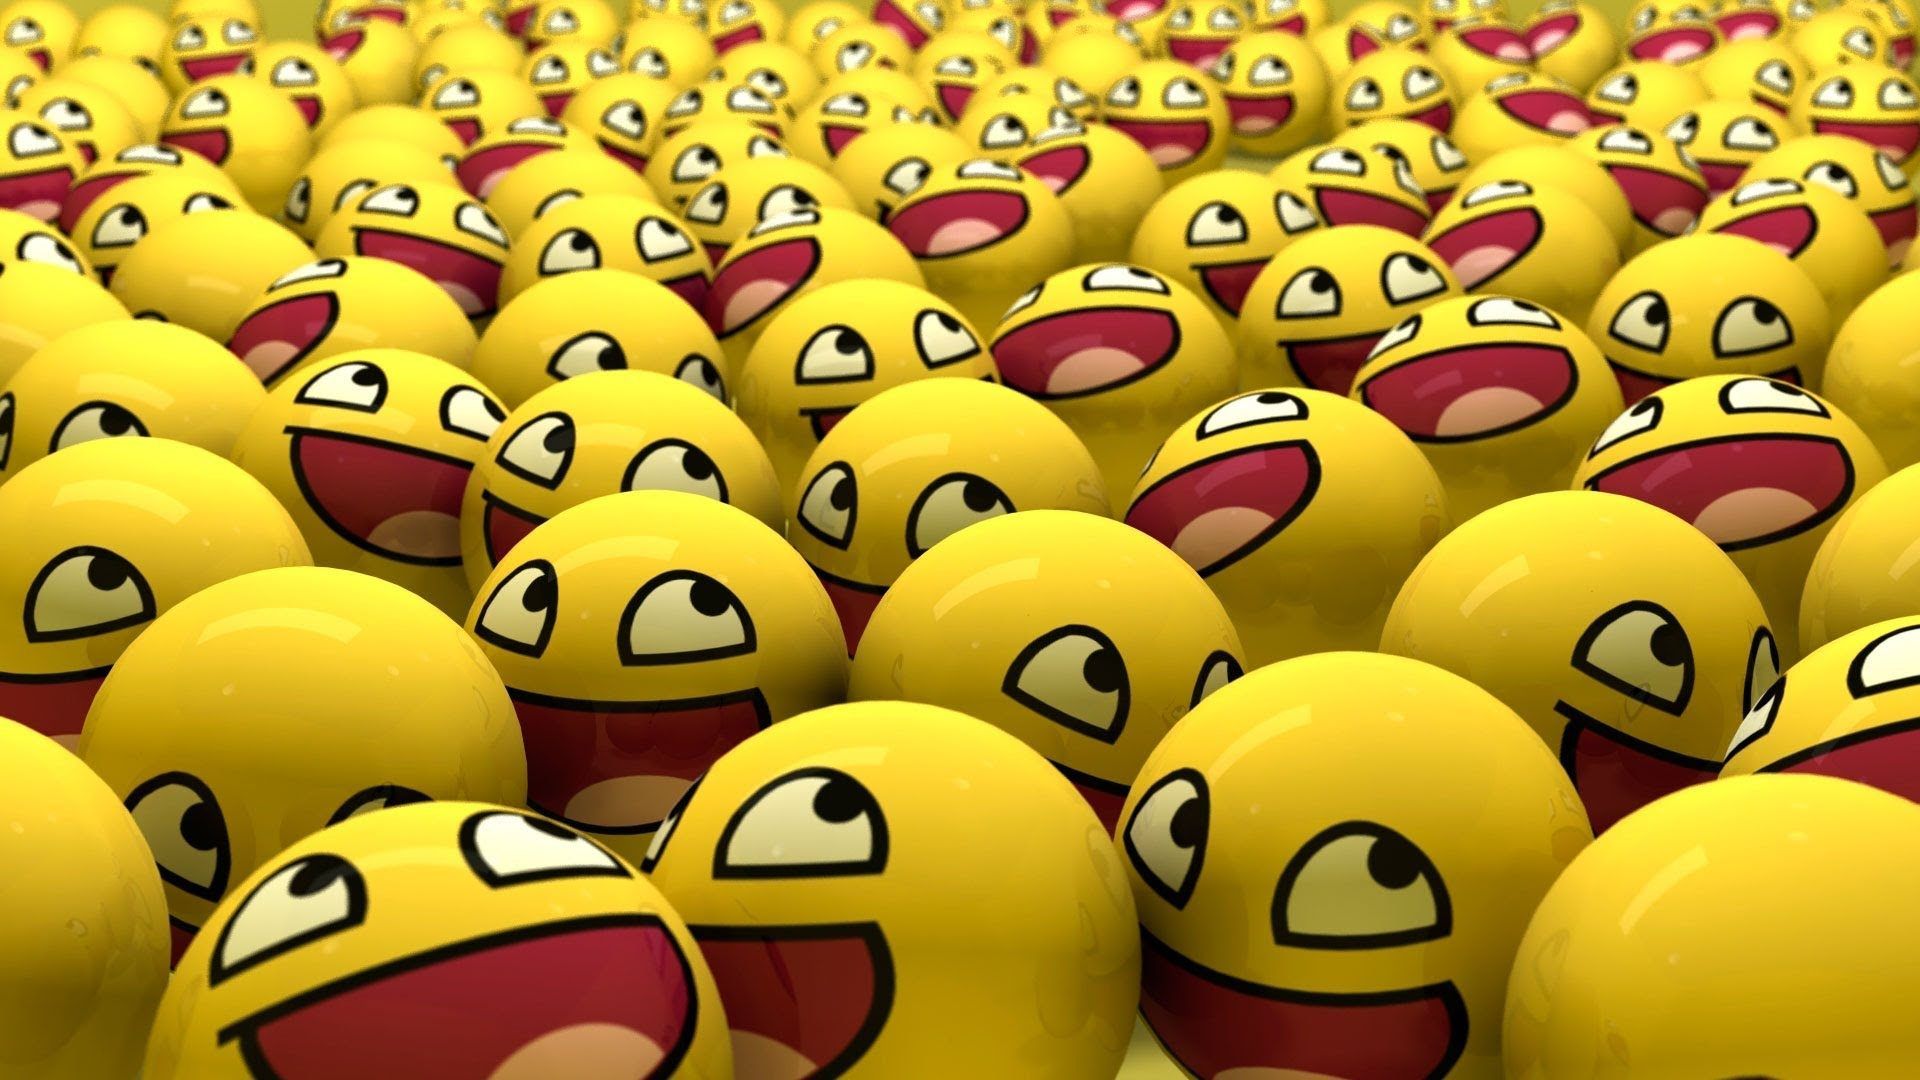 Smiling Faces Funny Wallpaper For Desktop Free Download Of Smiley ...